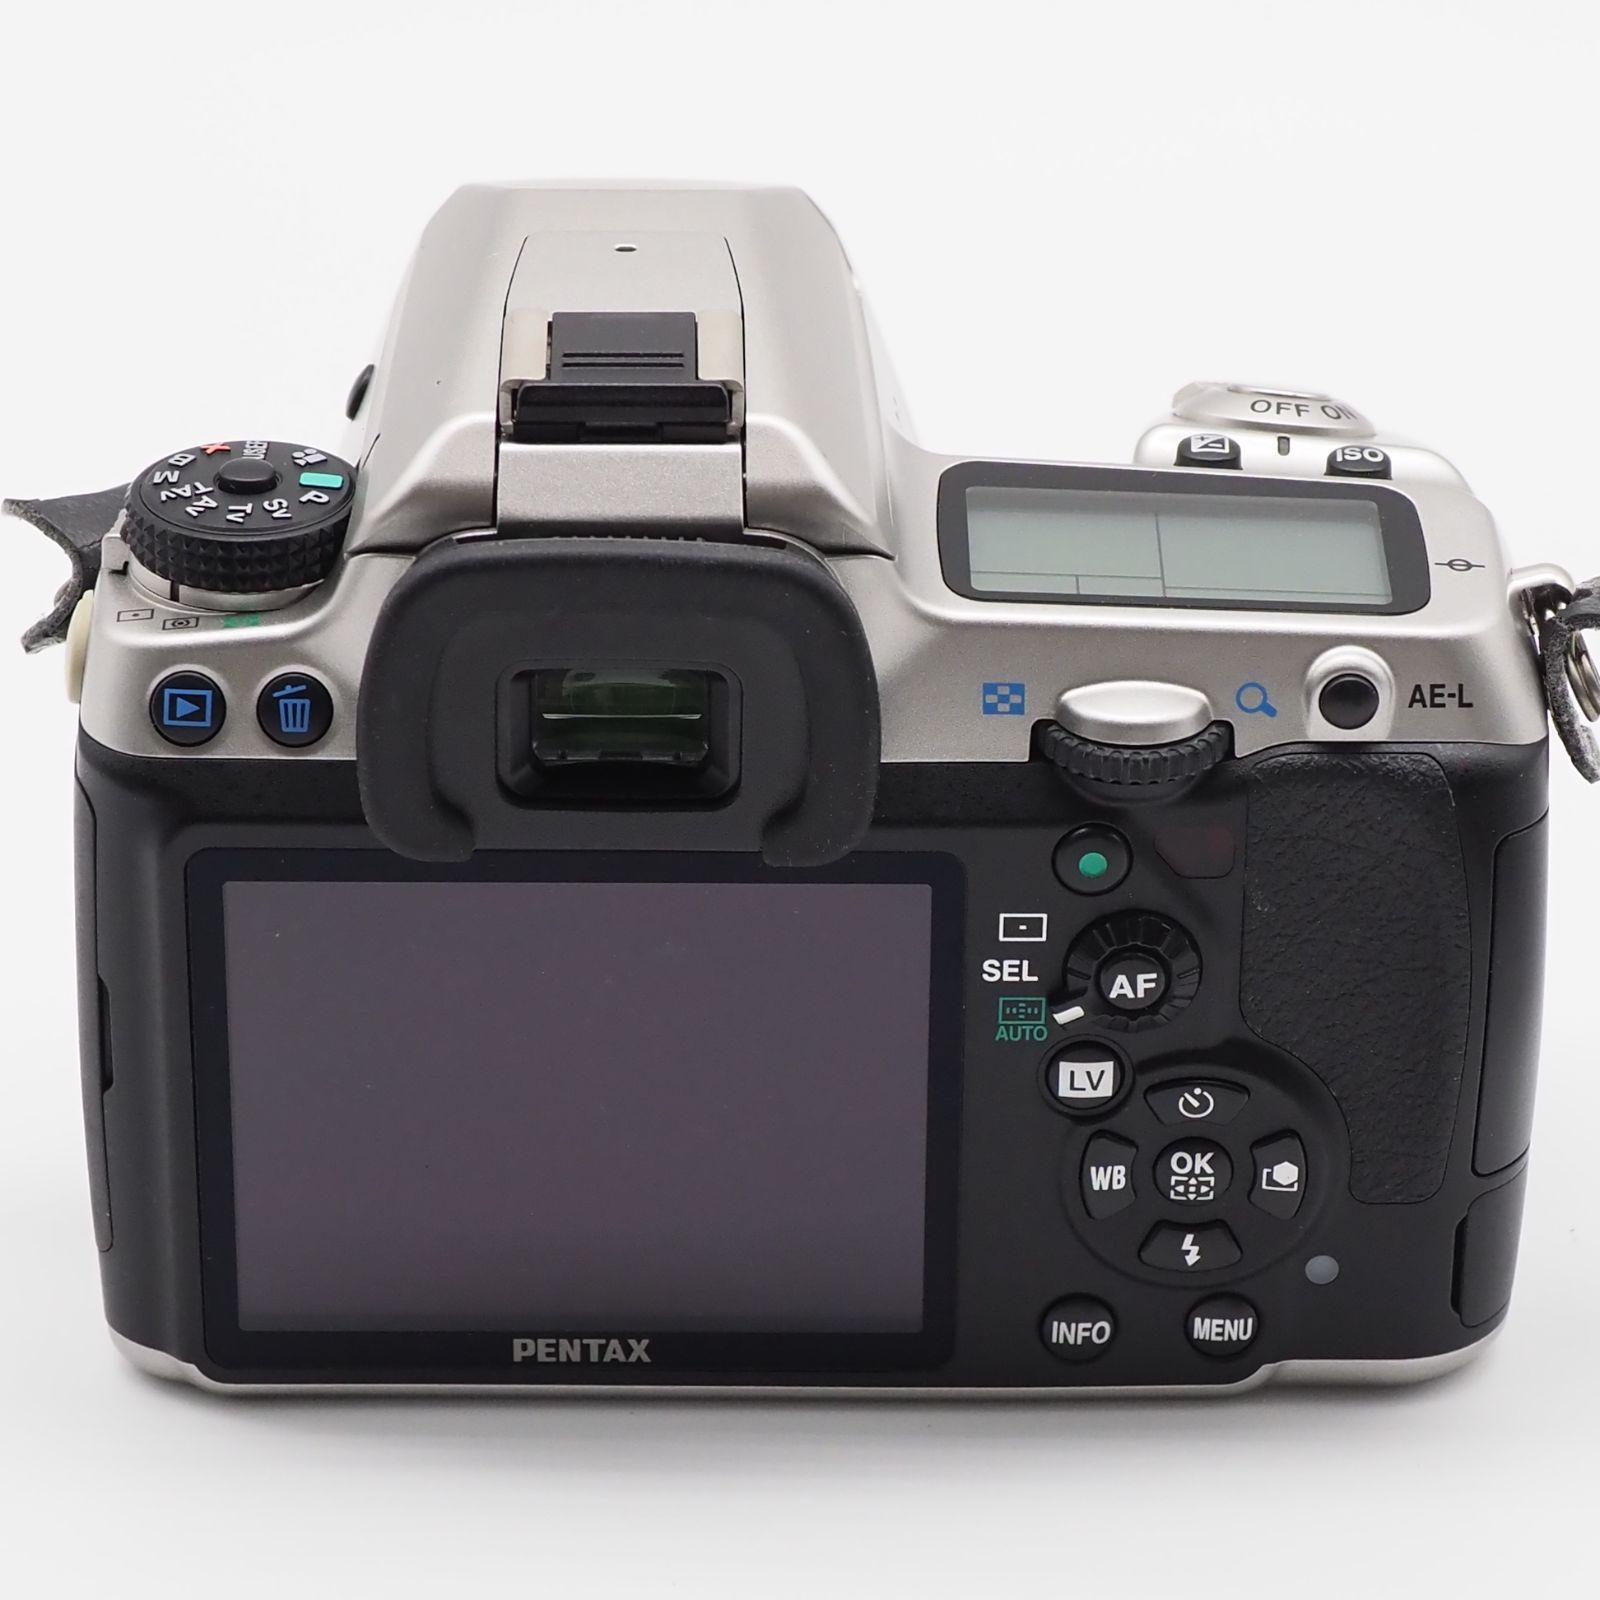 PENTAX デジタル一眼レフカメラ K-7 Limited シルバー K-7LIMITED S 